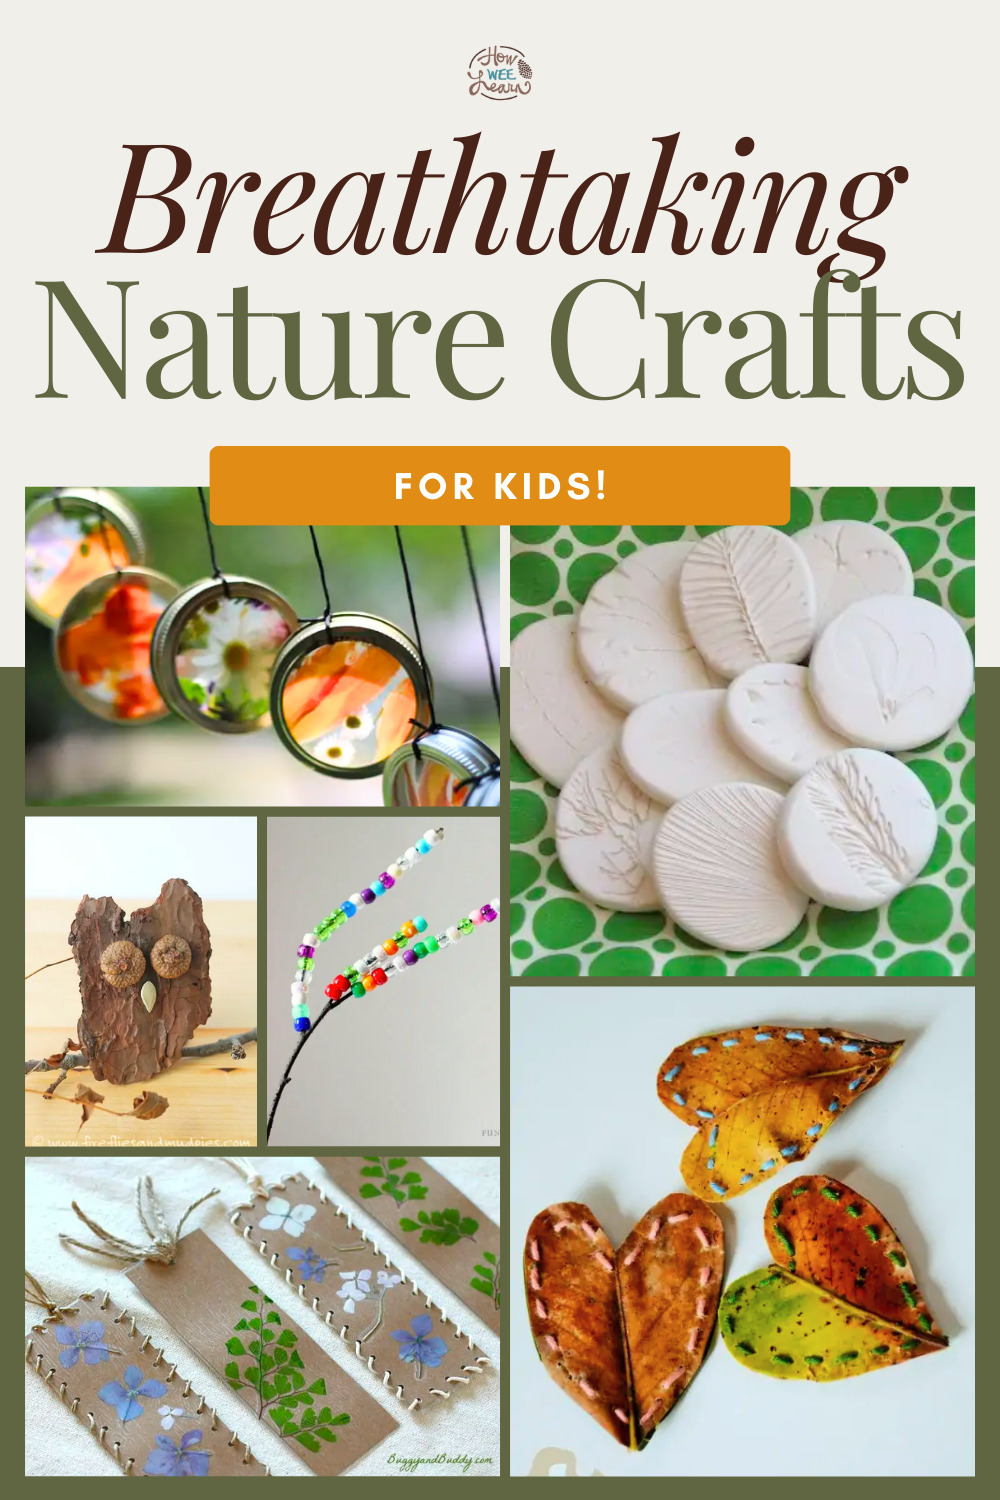 Breathtaking Nature Crafts for Kids